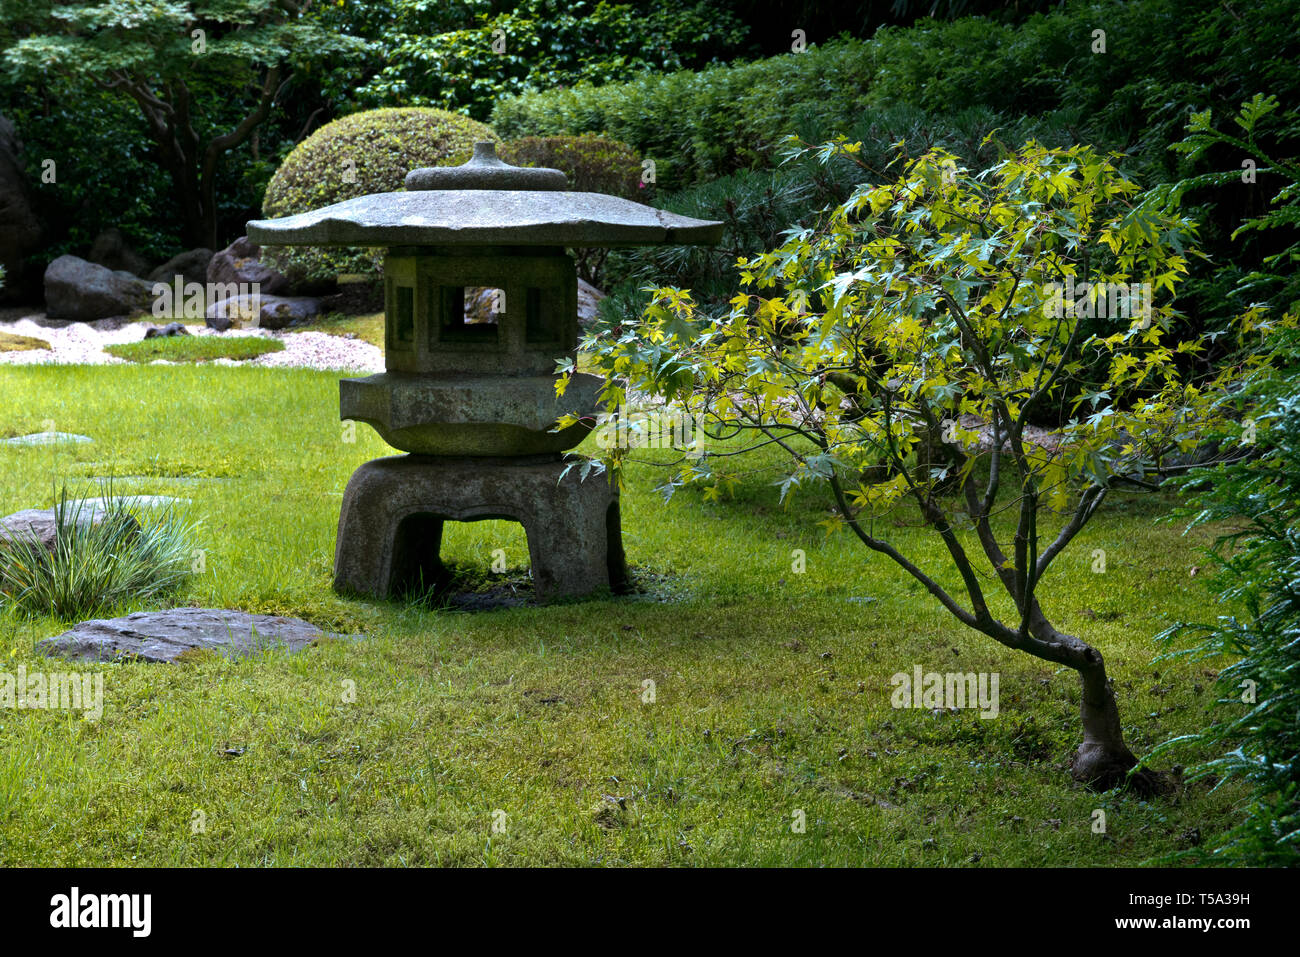 Stone temple garden decoration in the Japanese Tea Garden located in Golden Gate Park, San Francisco California. Stock Photo